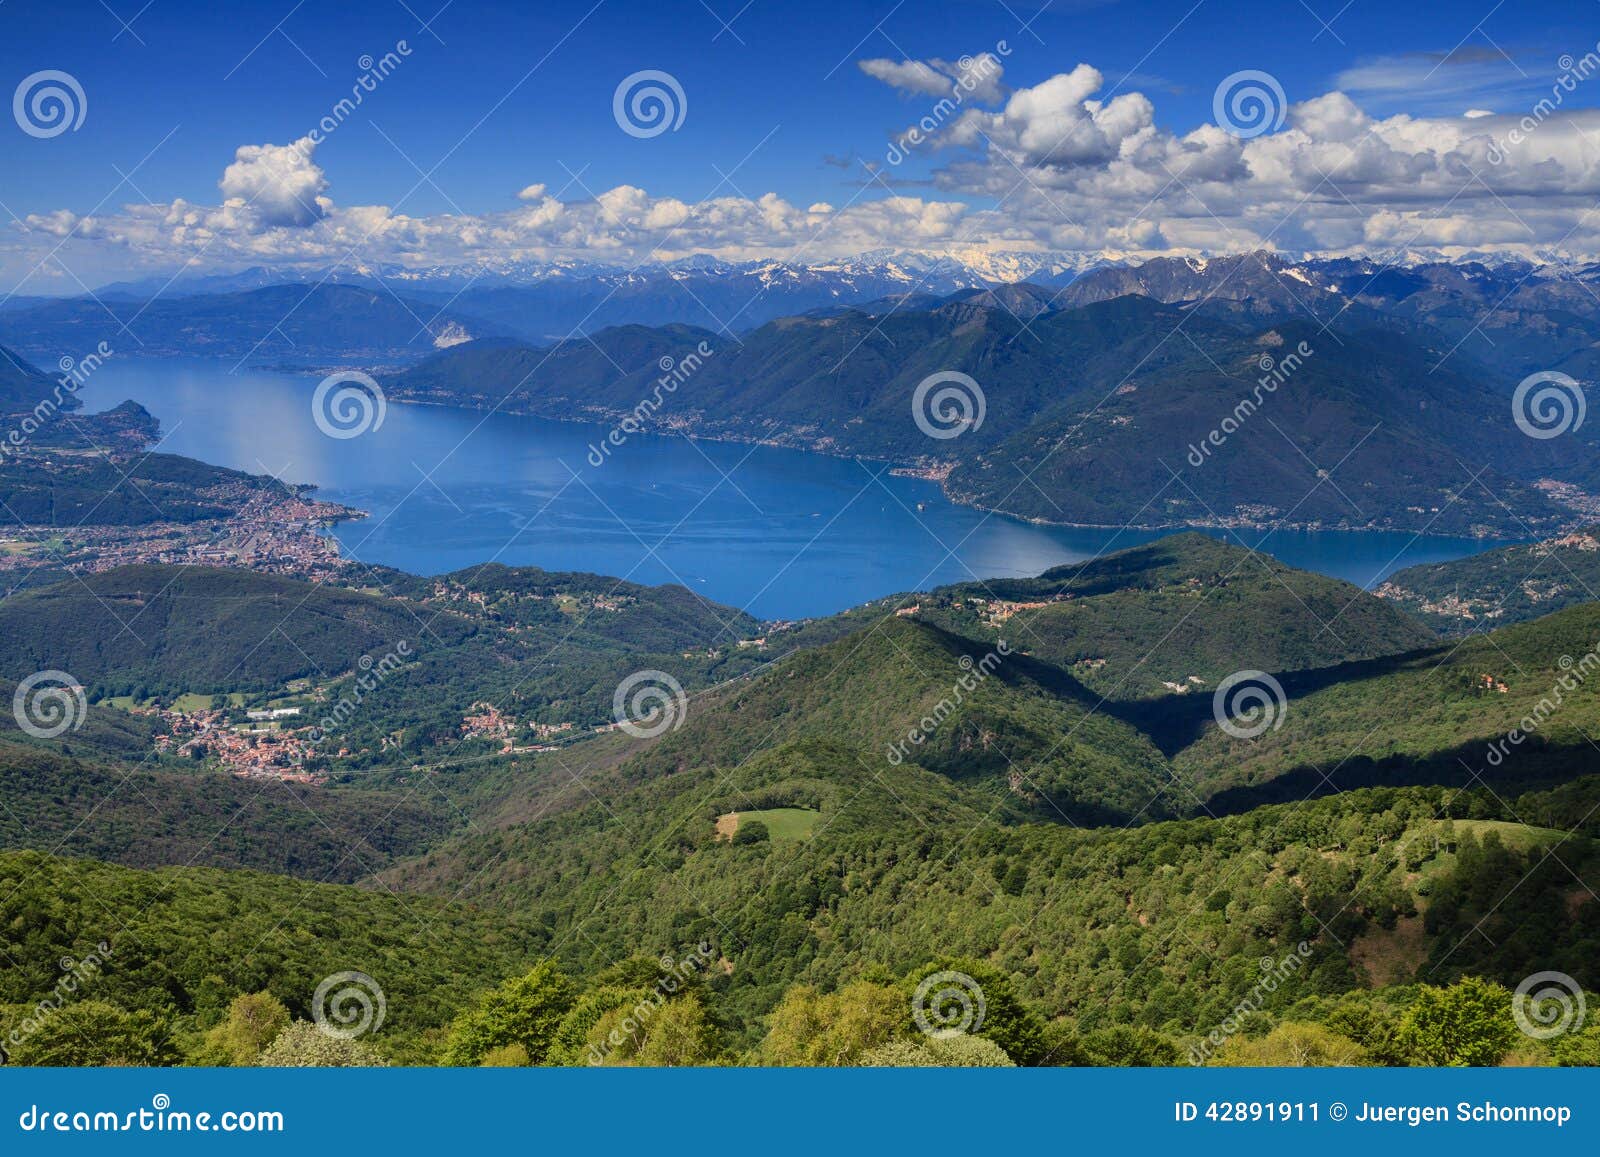 lago maggiore as seen from monte lema